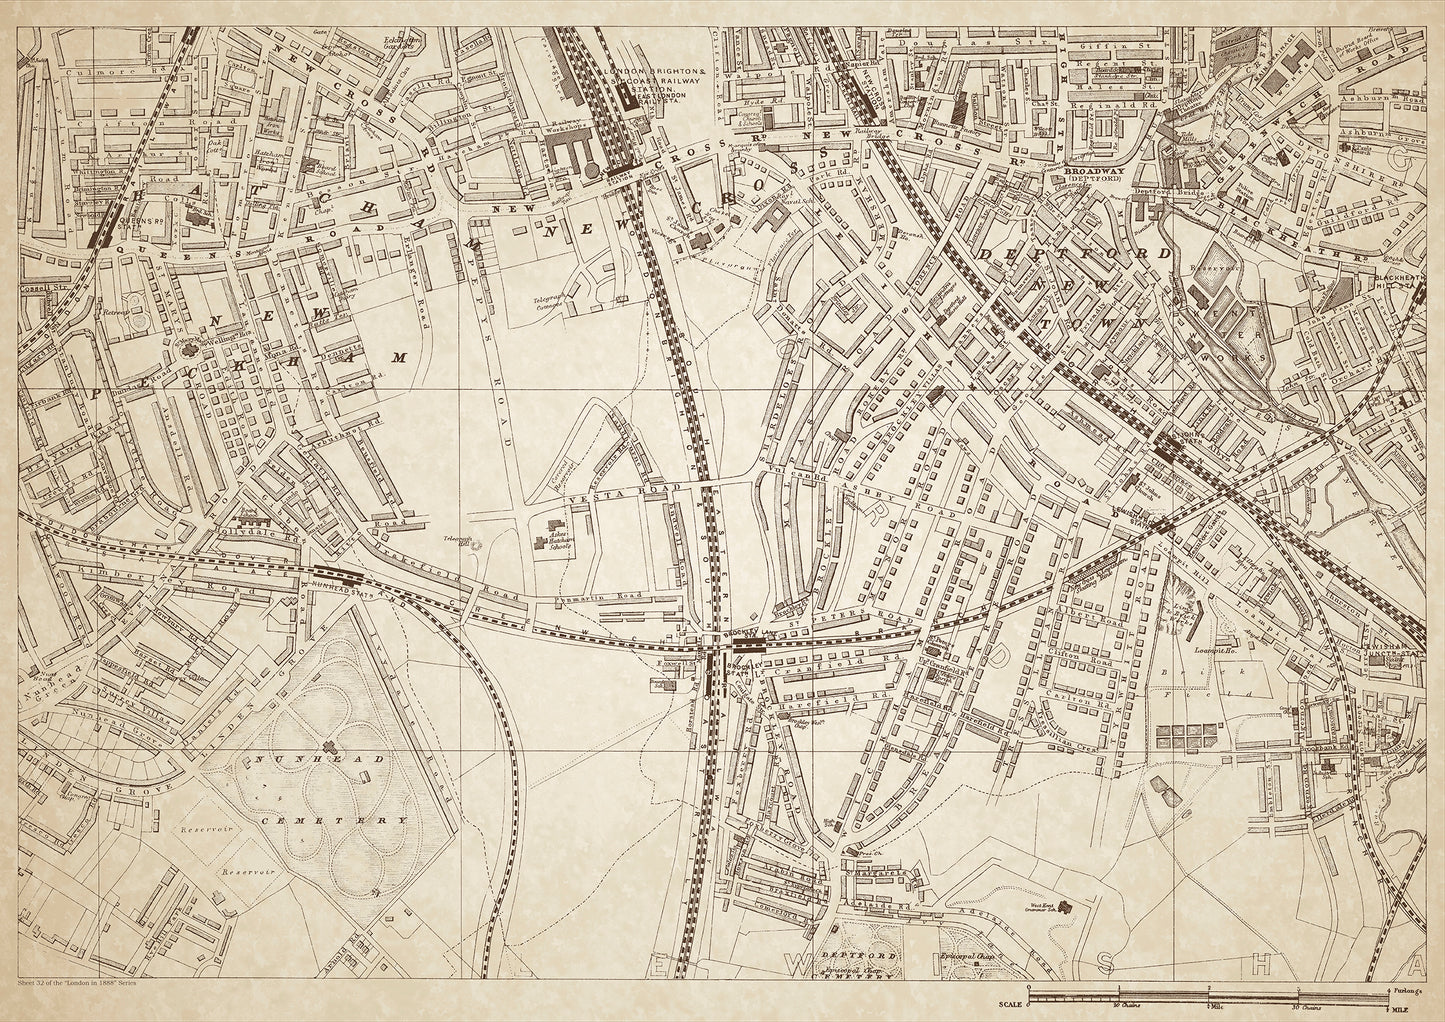 London in 1888 Series - showing Hatcham, New Peckham, Deptford, Lewisham - sheet 33